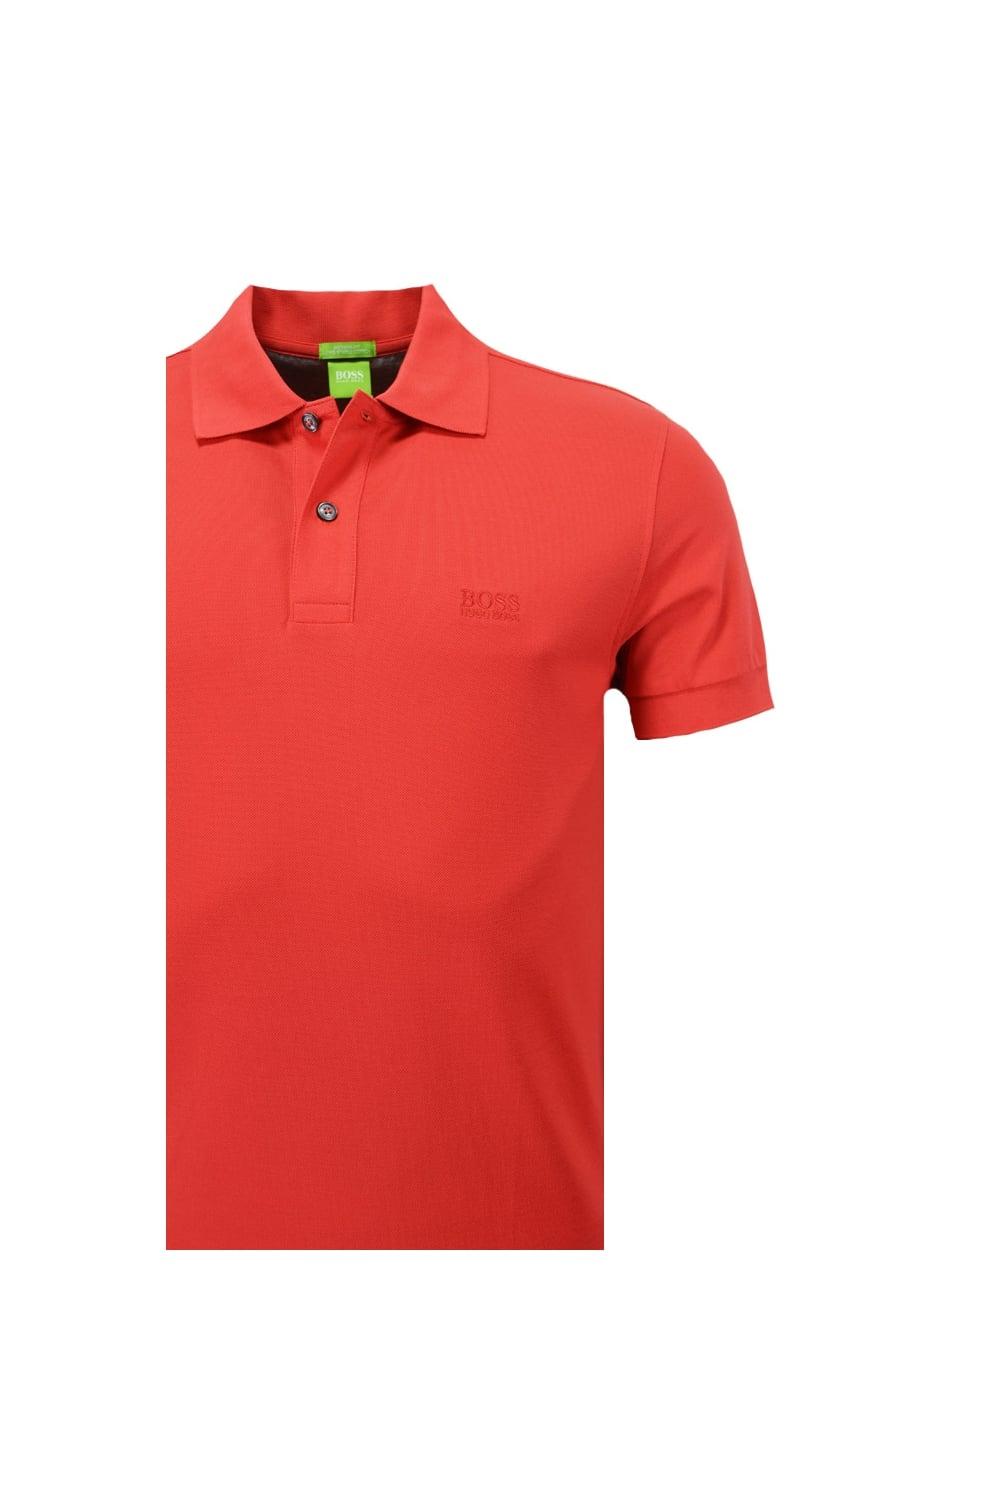 Red and Green C Logo - Hugo Boss Green C-firenze Logo Polo Shirt - Clothing from Michael ...